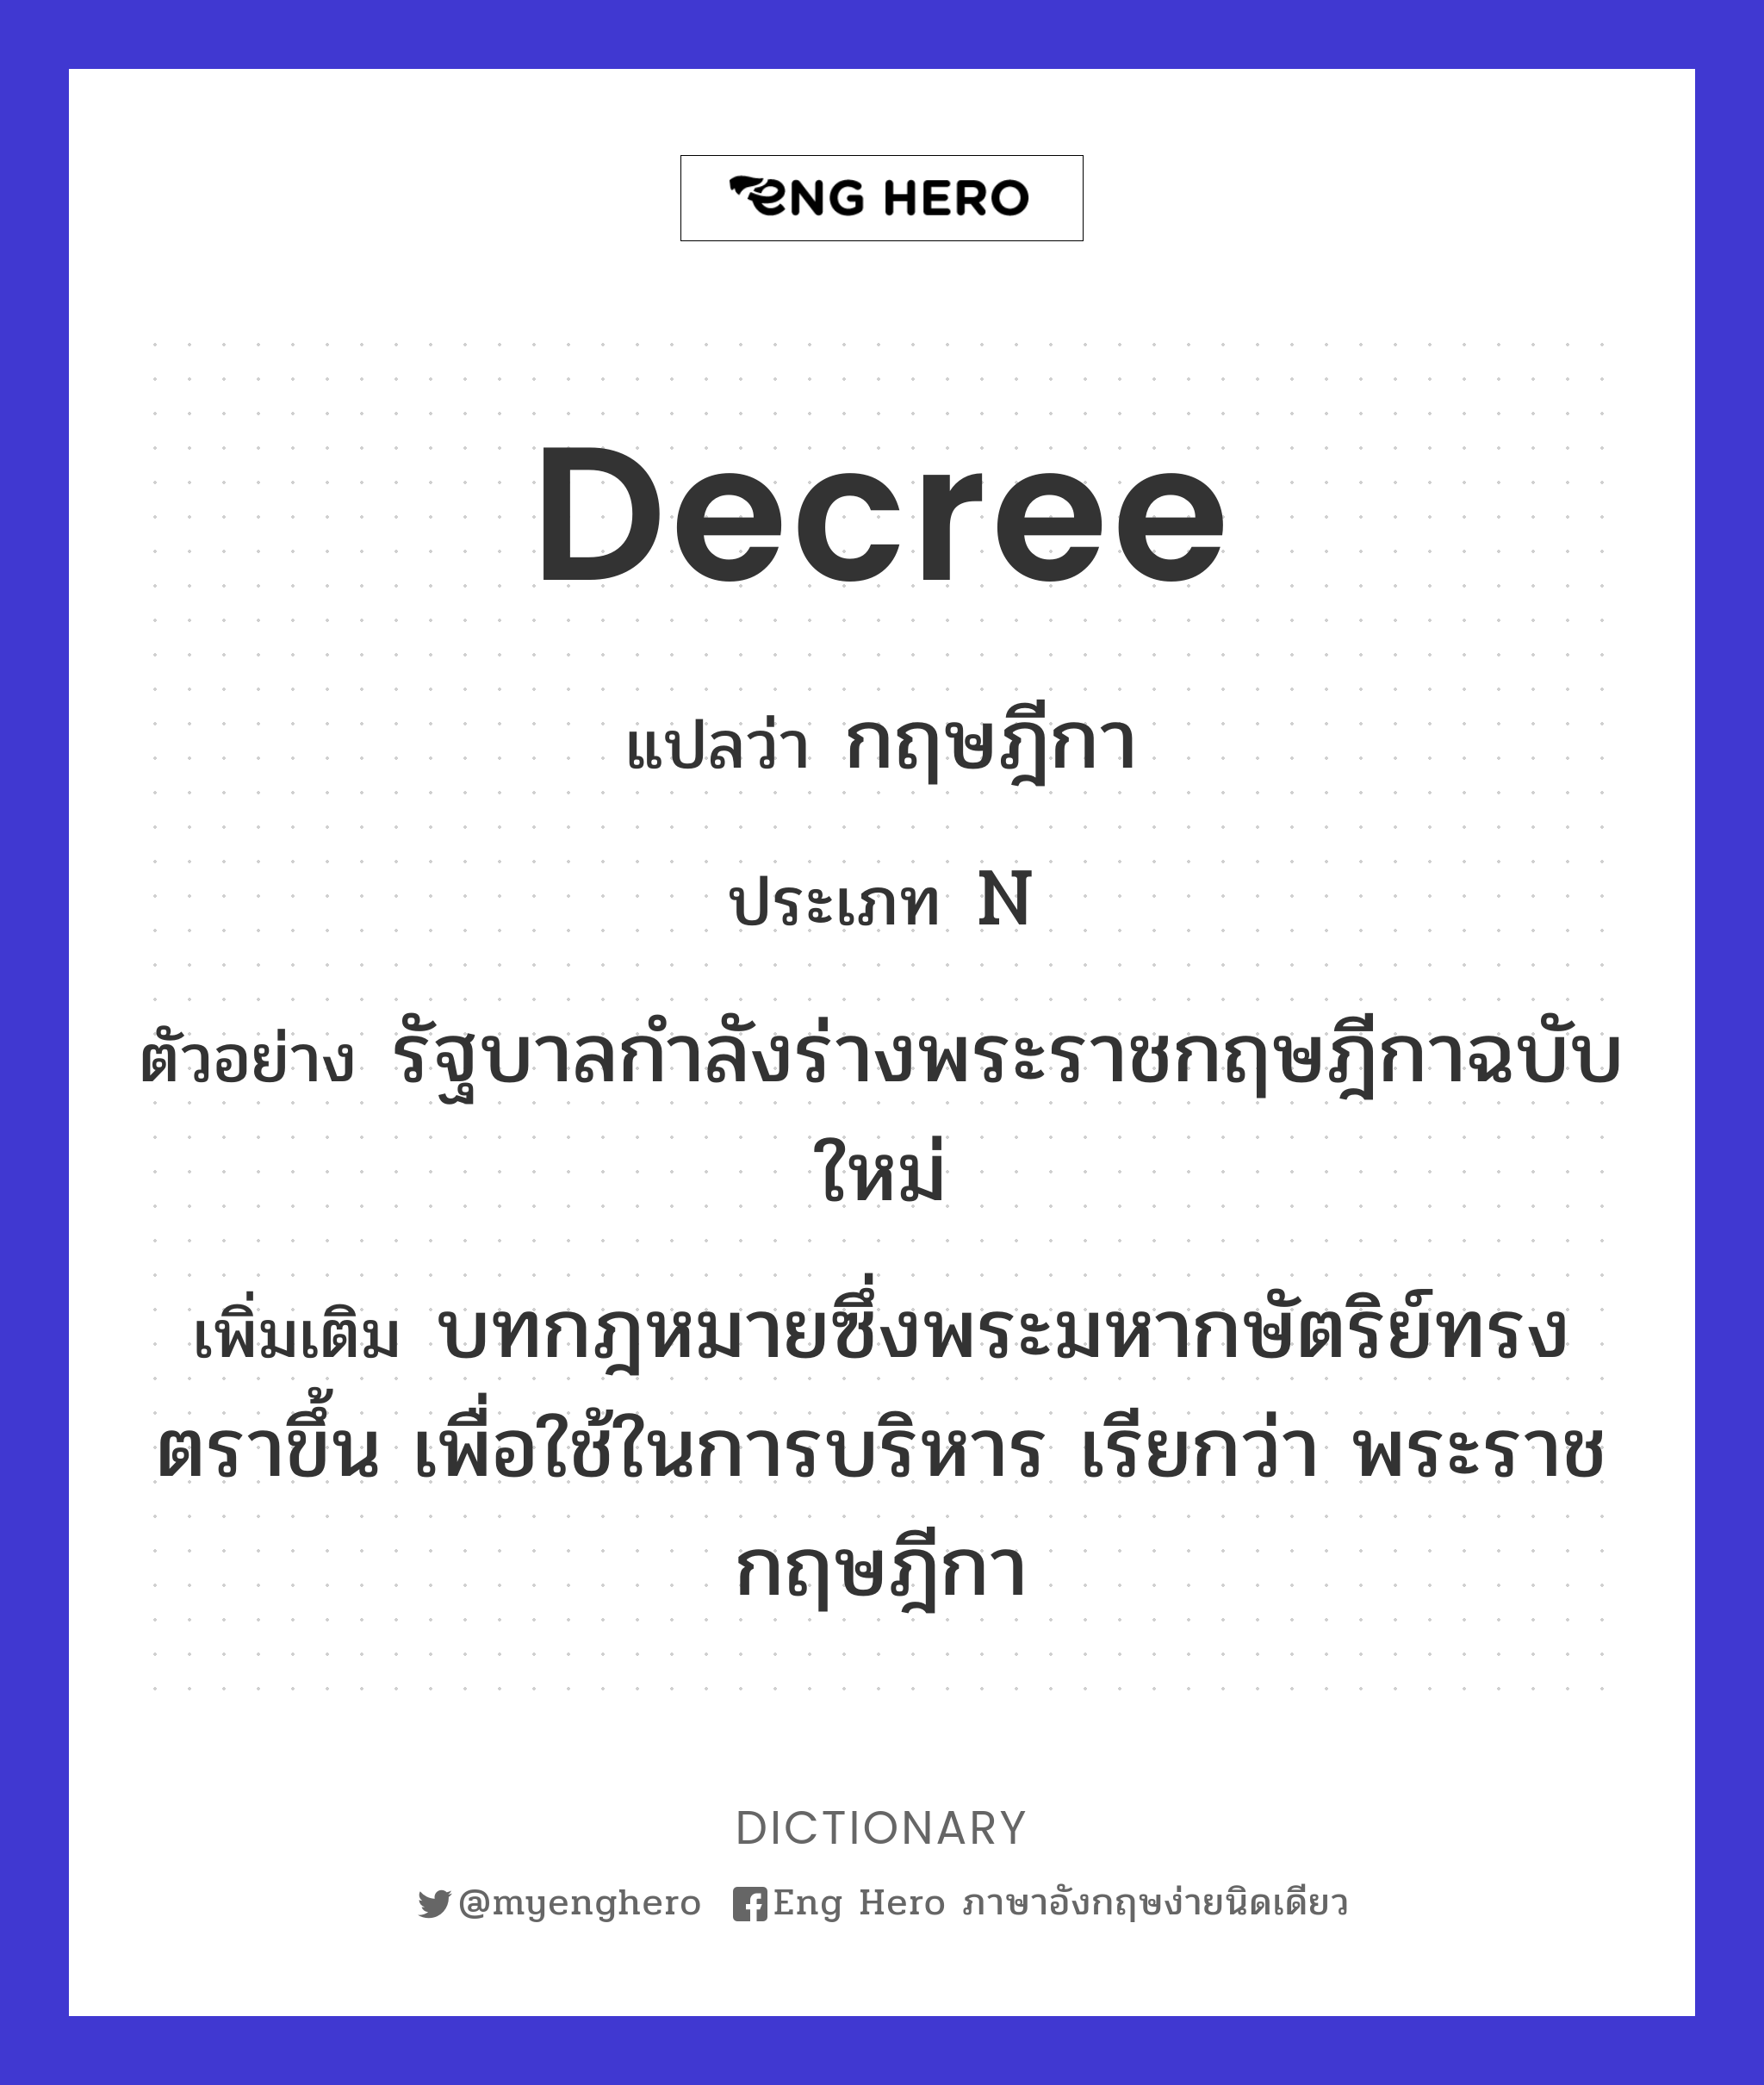 decree